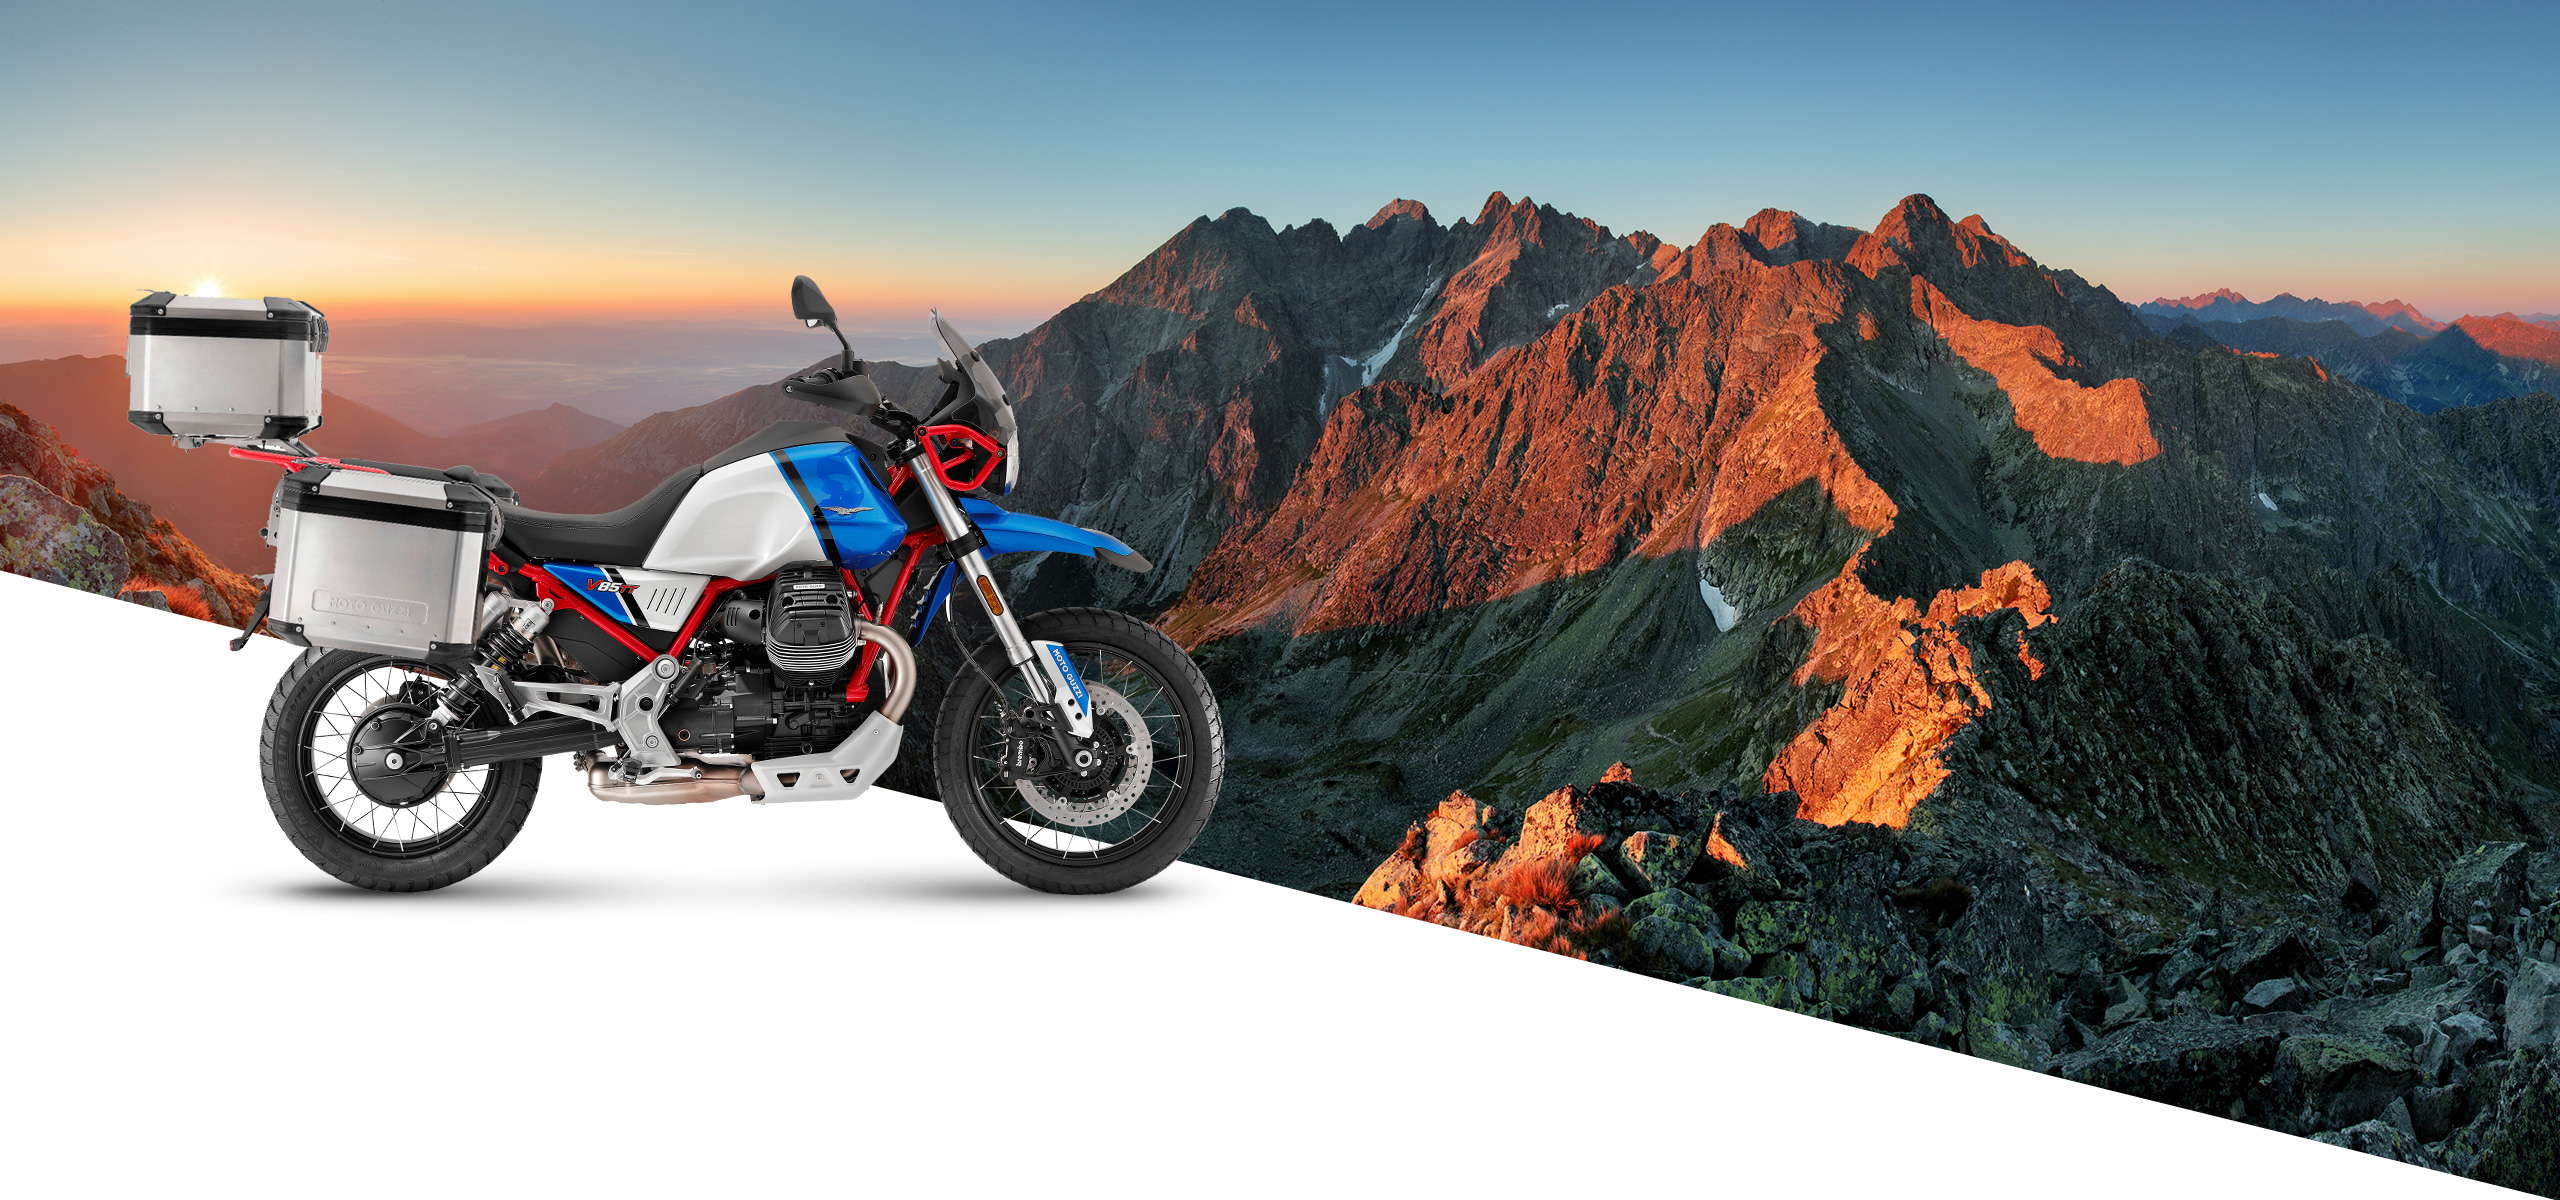 Moto Guzzi V85TT Adventure available at Frasers Motorcycles